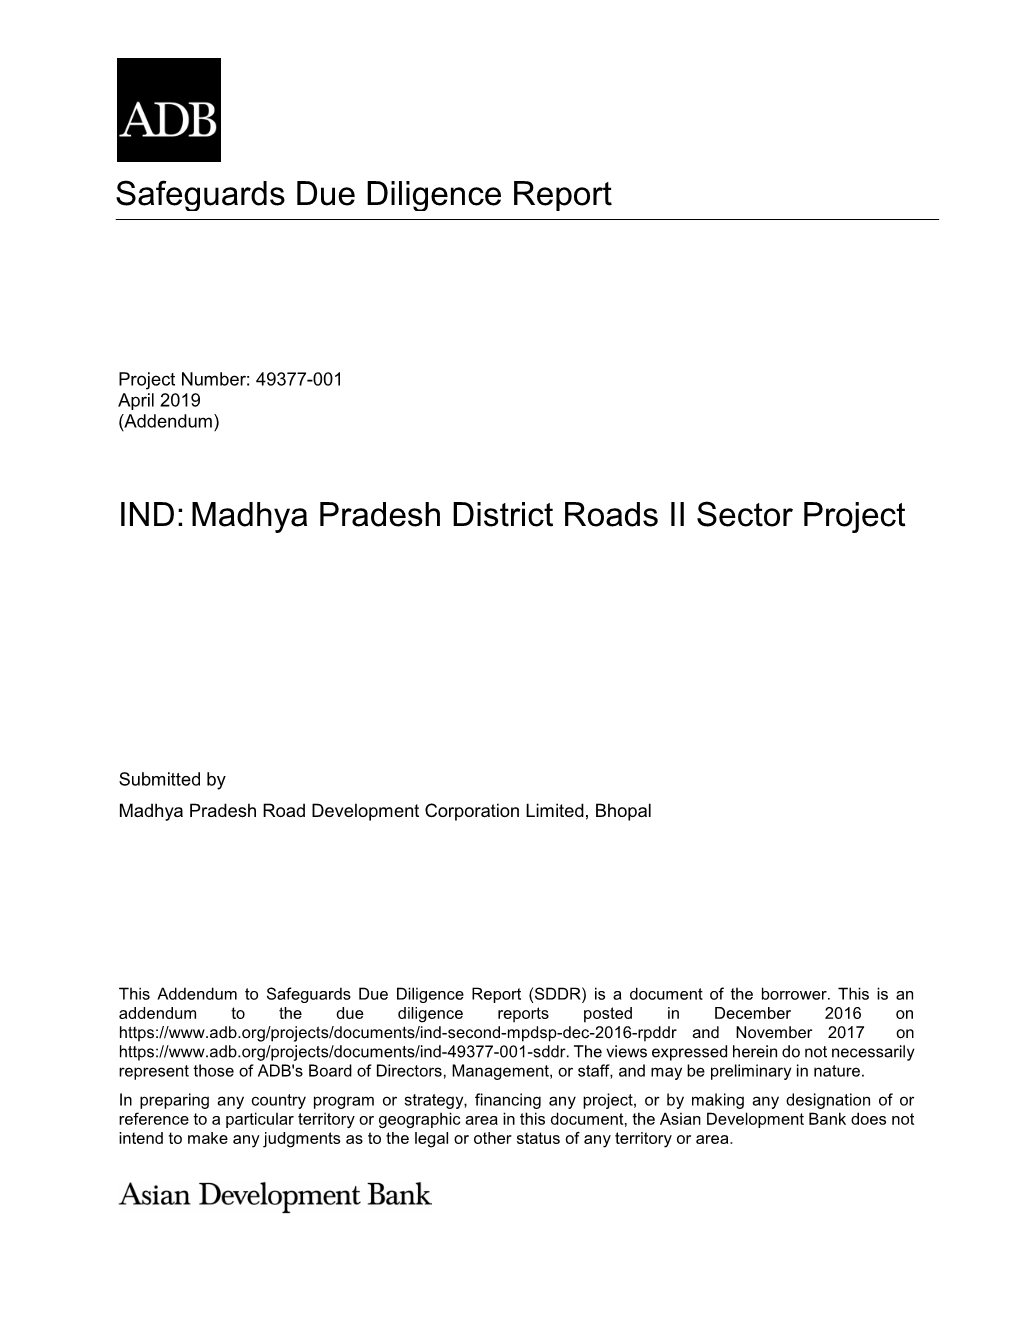 49377-001: Madhya Pradesh District Roads II Sector Project